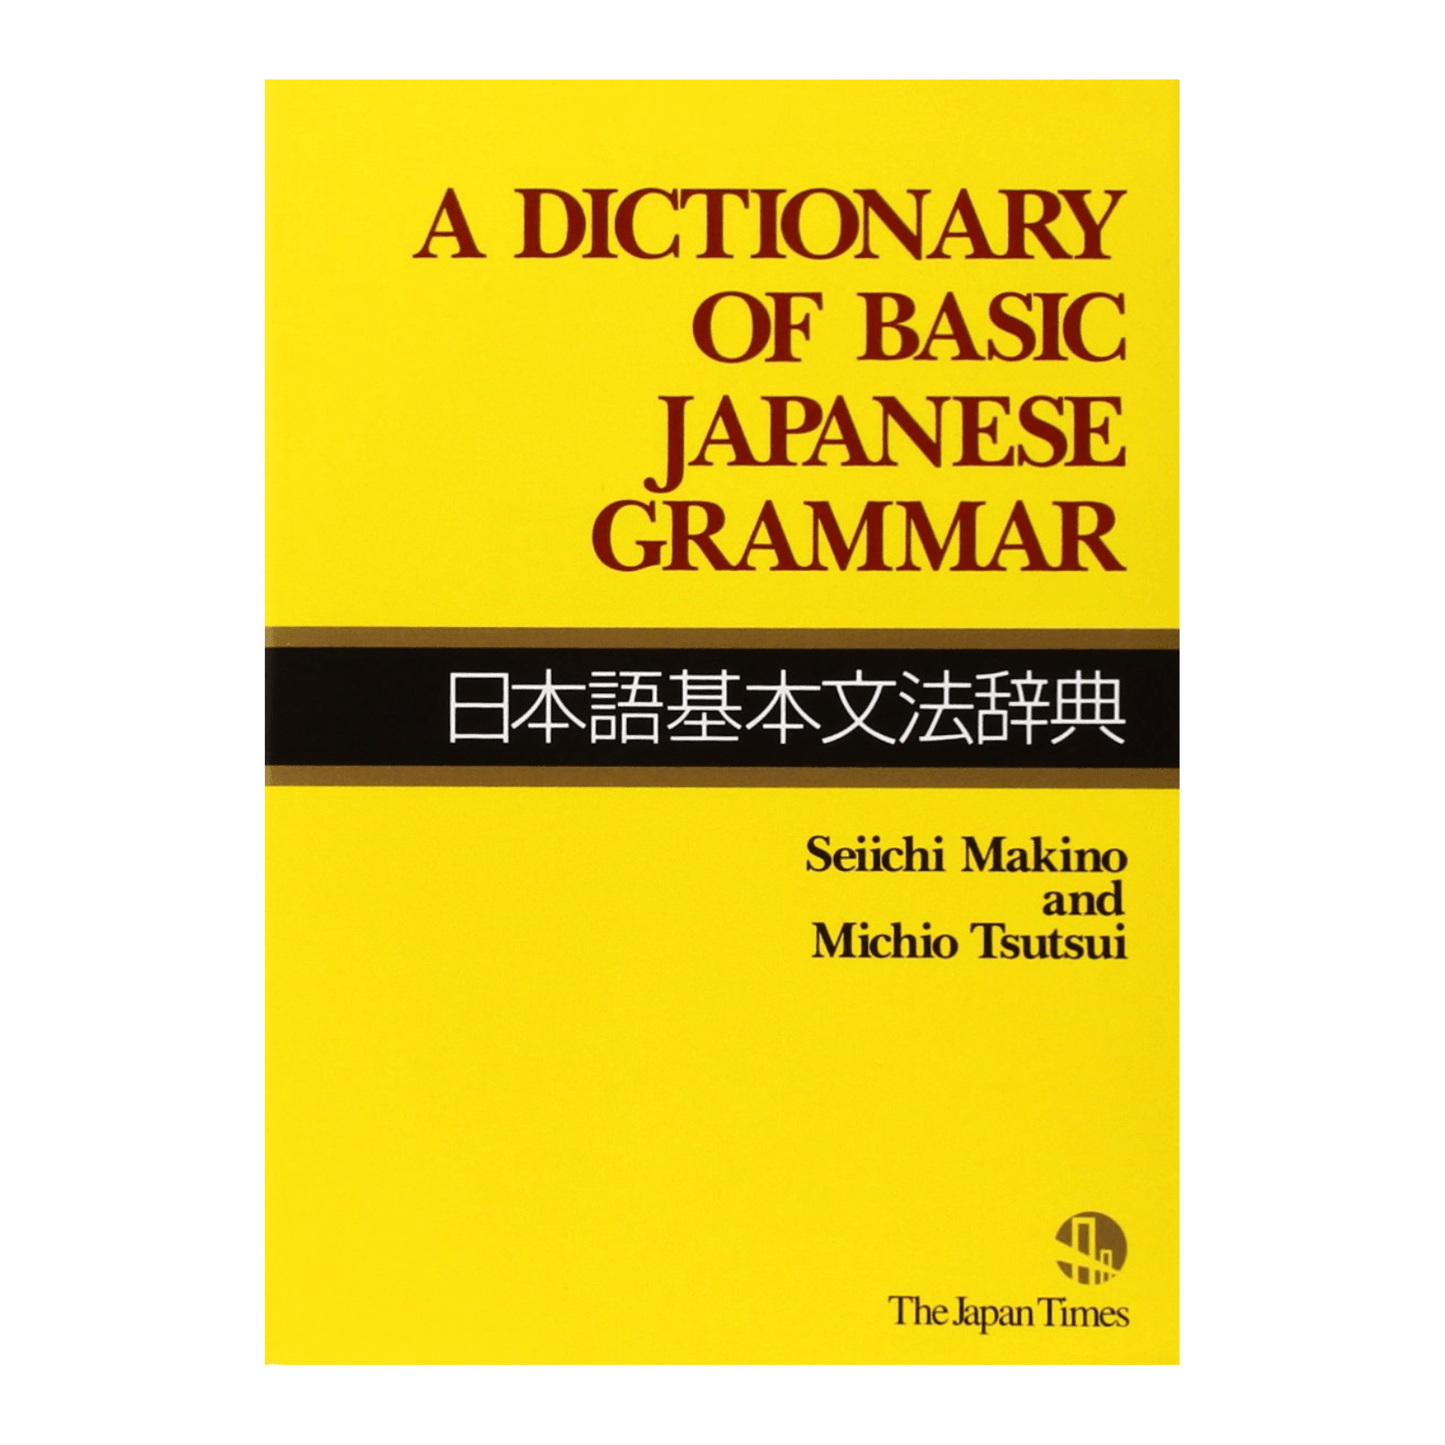 Manuale giapponese | Un dizionario di grammatica giapponese di base (日本語基本文法辞典) ChitoroShop